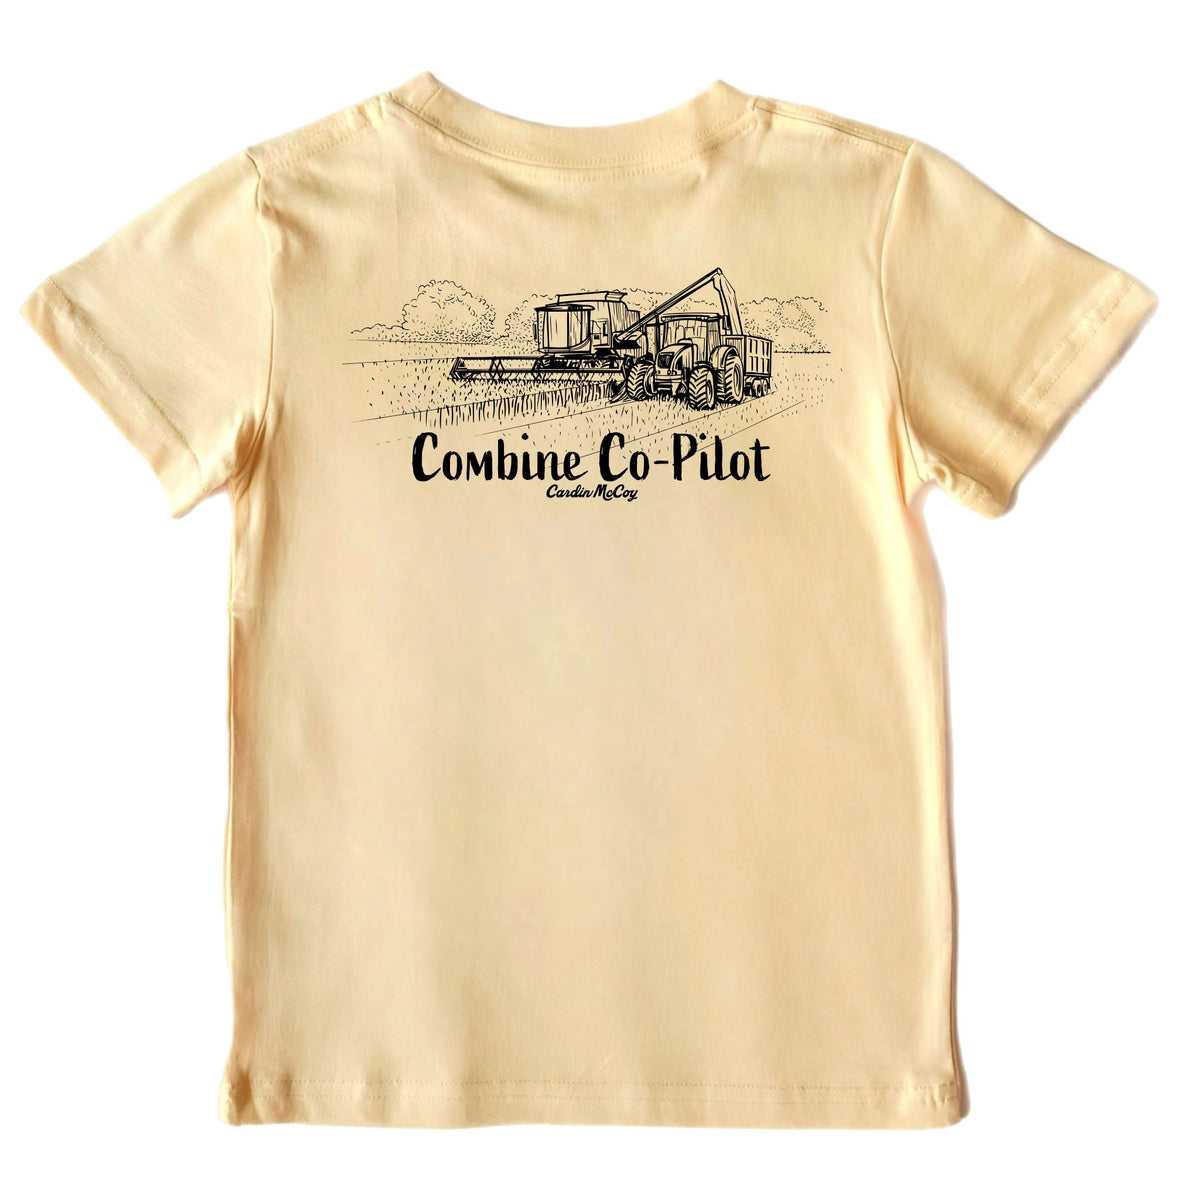 Boys' Combine Co-Pilot Short-Sleeve Tee Short Sleeve T-Shirt Cardin McCoy Butter XXS (2/3) Pocket